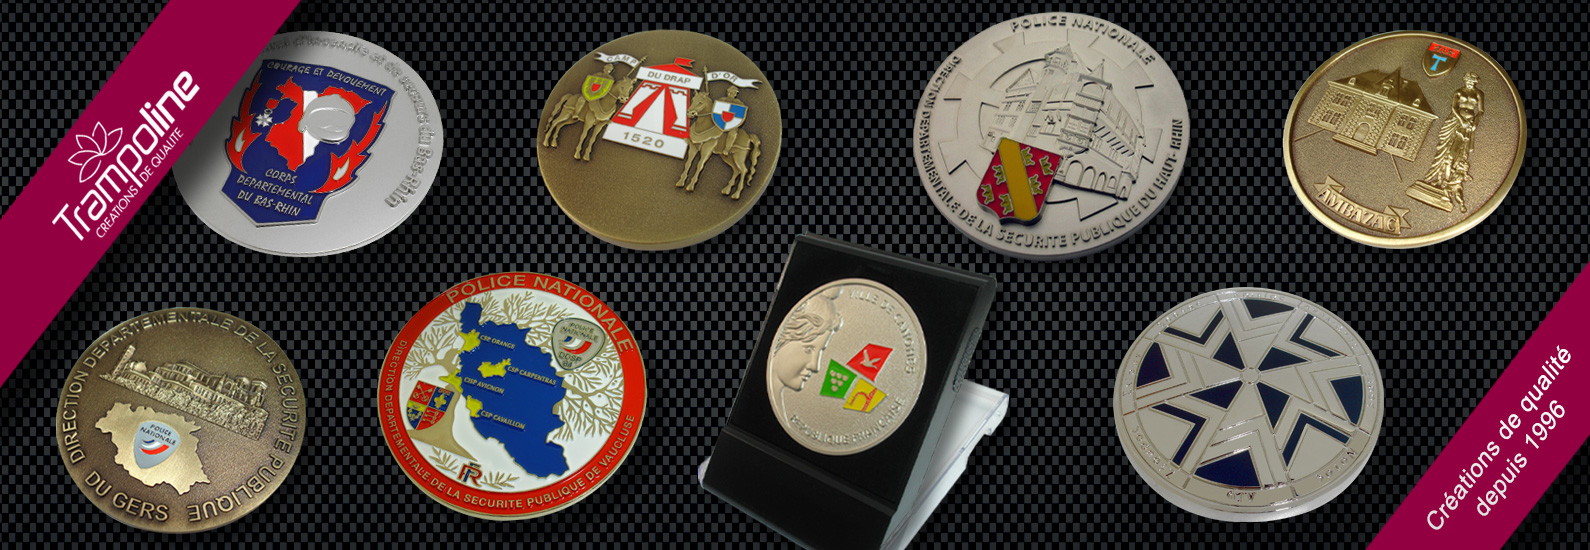 2 fabricant medaille logo entreprise zamac bronze couleur avec ecrin